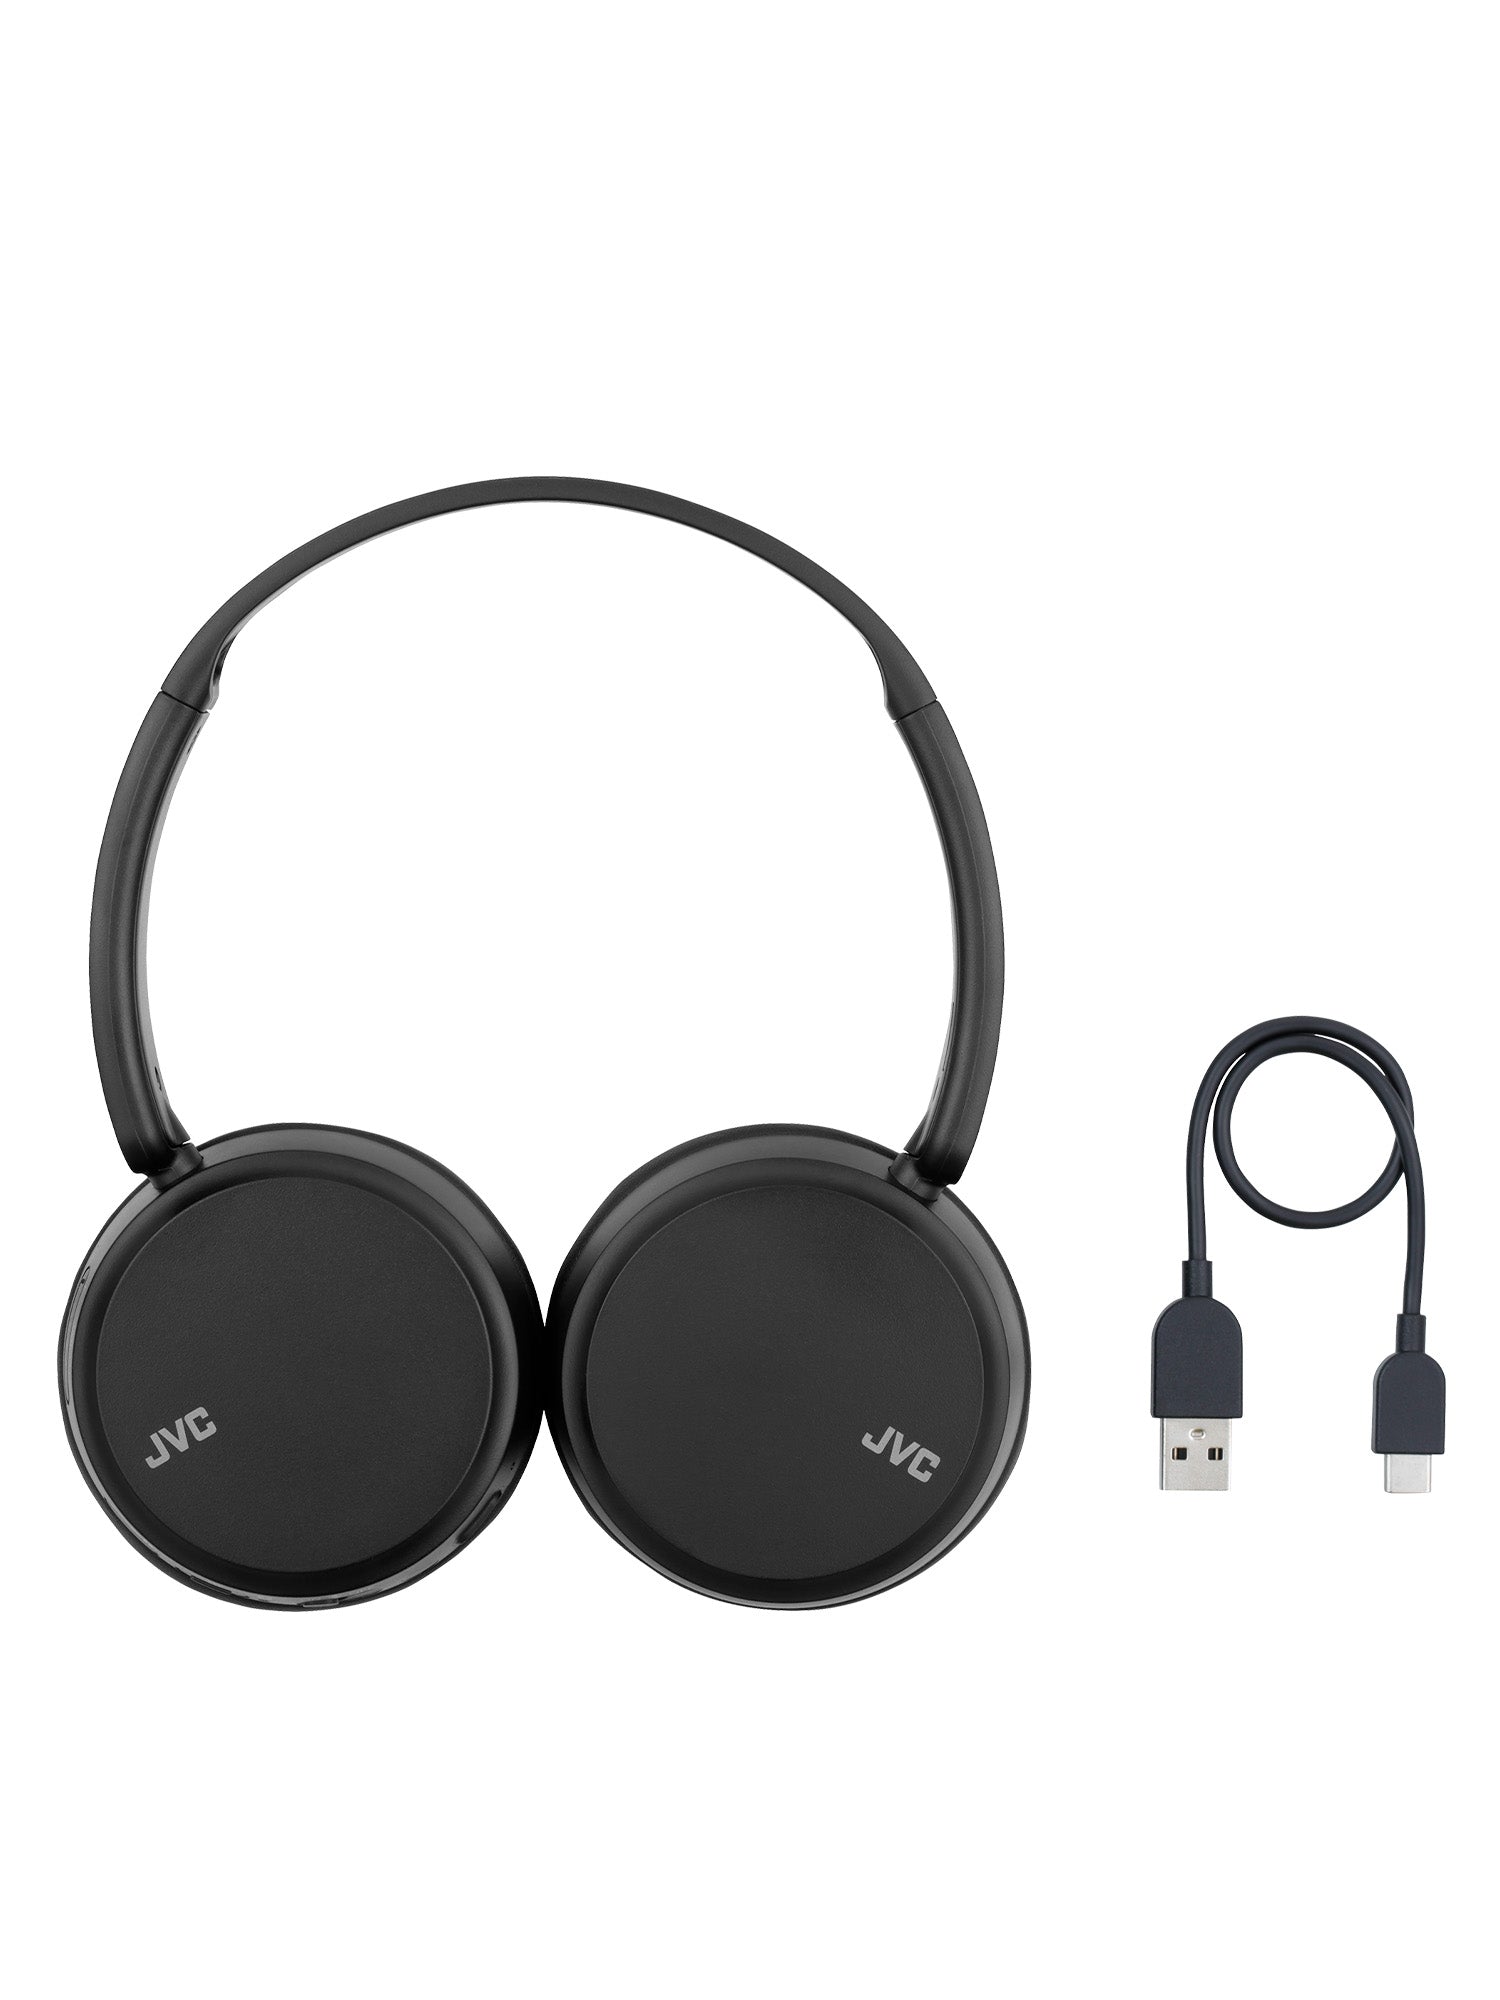 HA-S36W-B in black wireless bluetooth headphones and usb charging lead